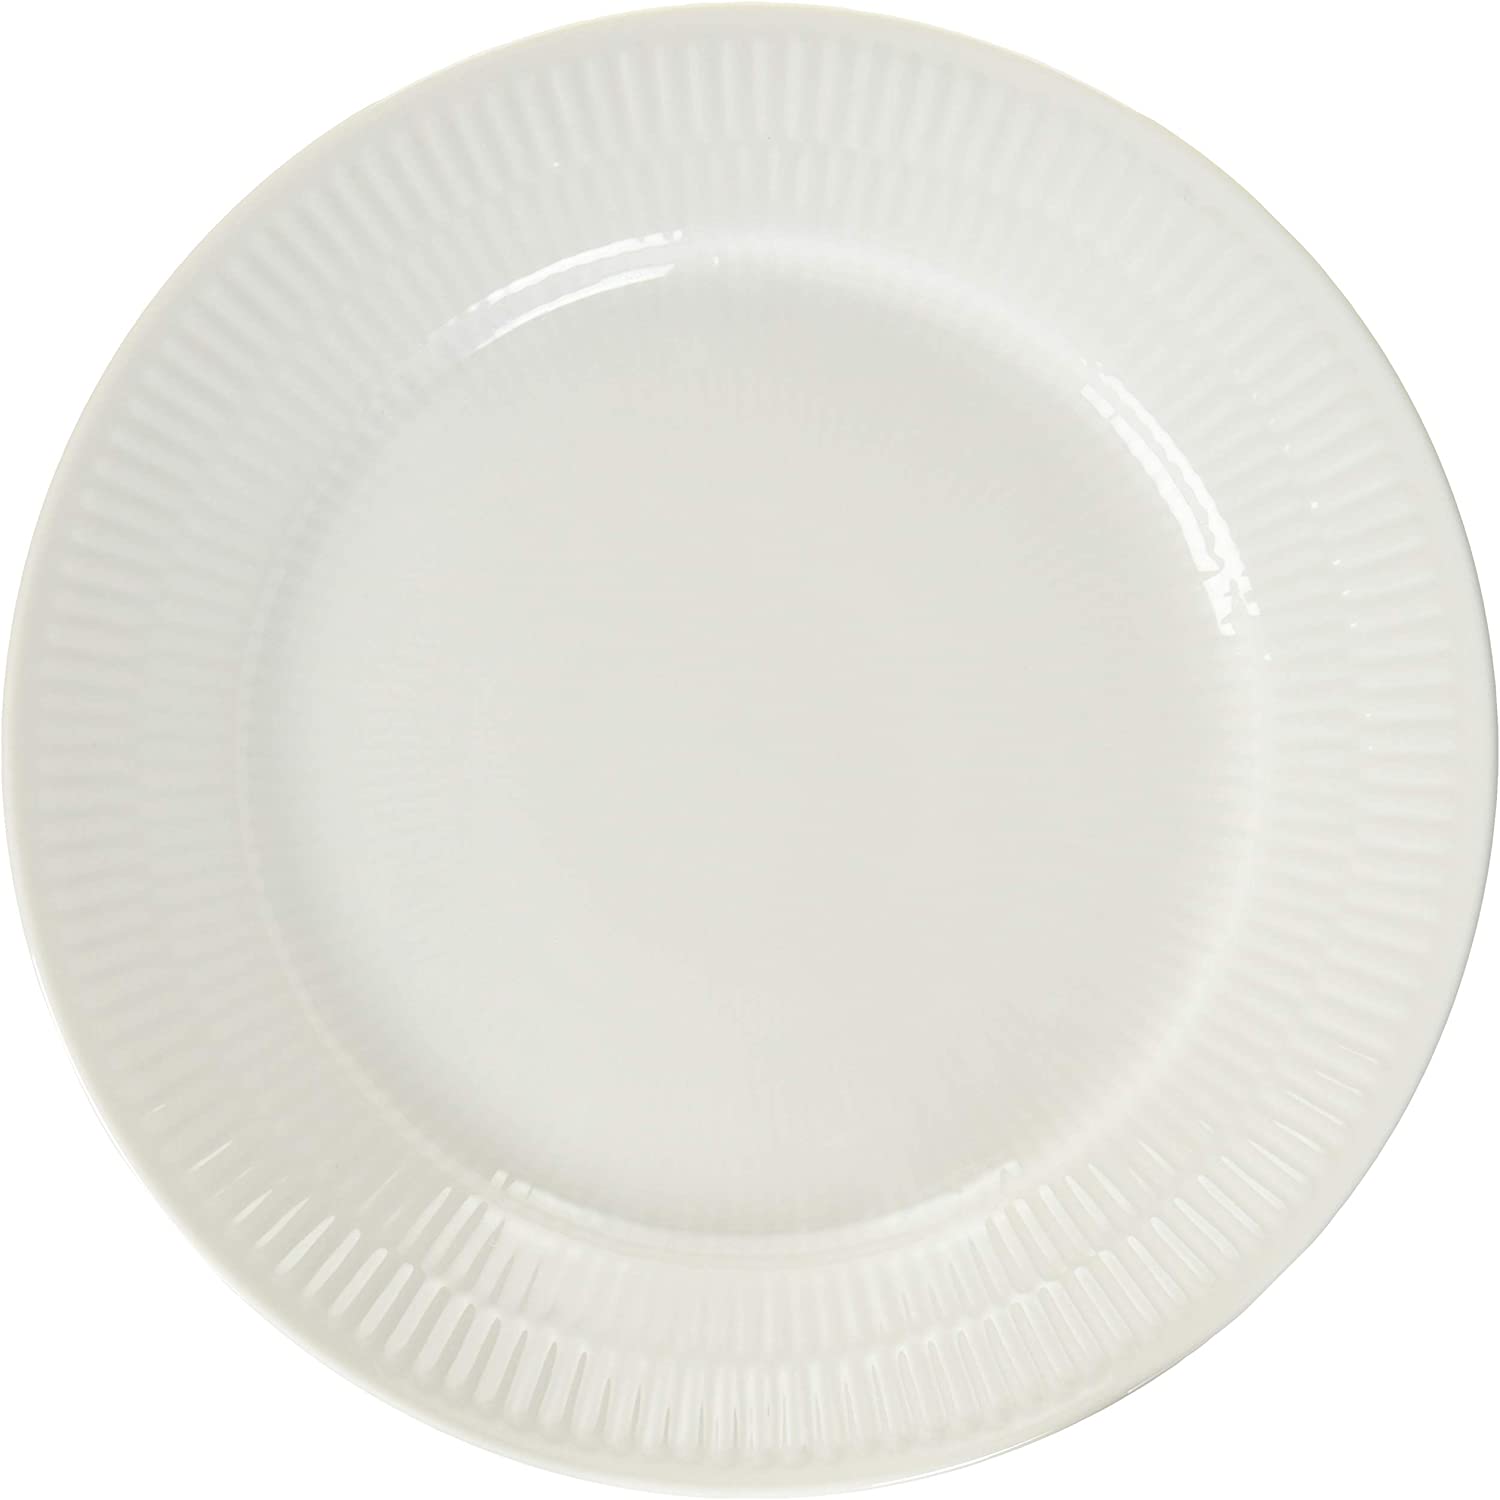 Royal Copenhagen White Tea Plate with Rim Ribbed (19 cm)